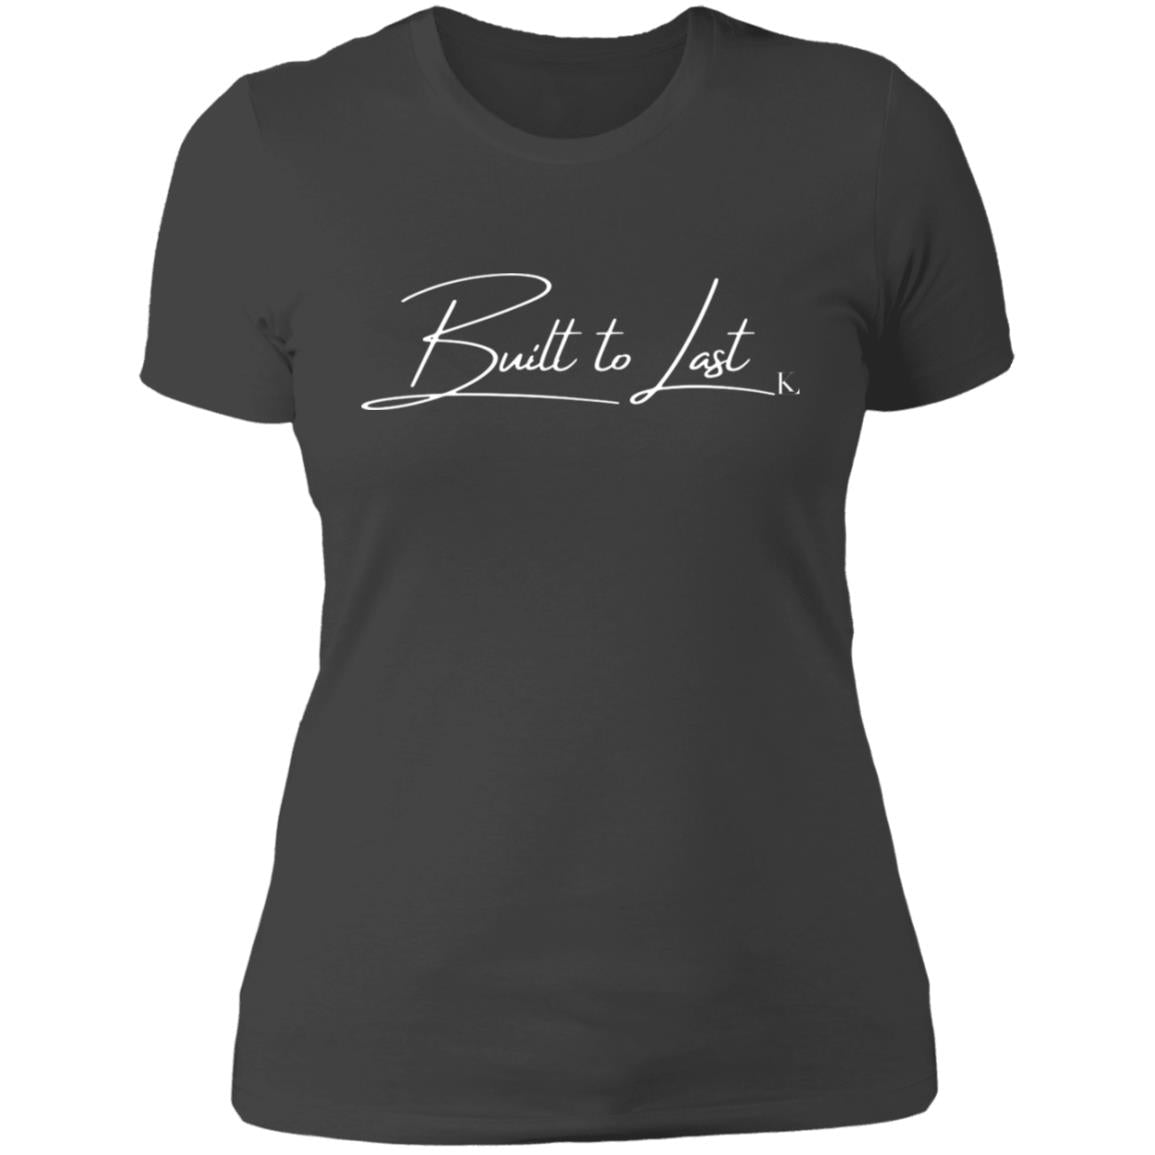 BUILT TO LAST Women's Crew T-Shirt